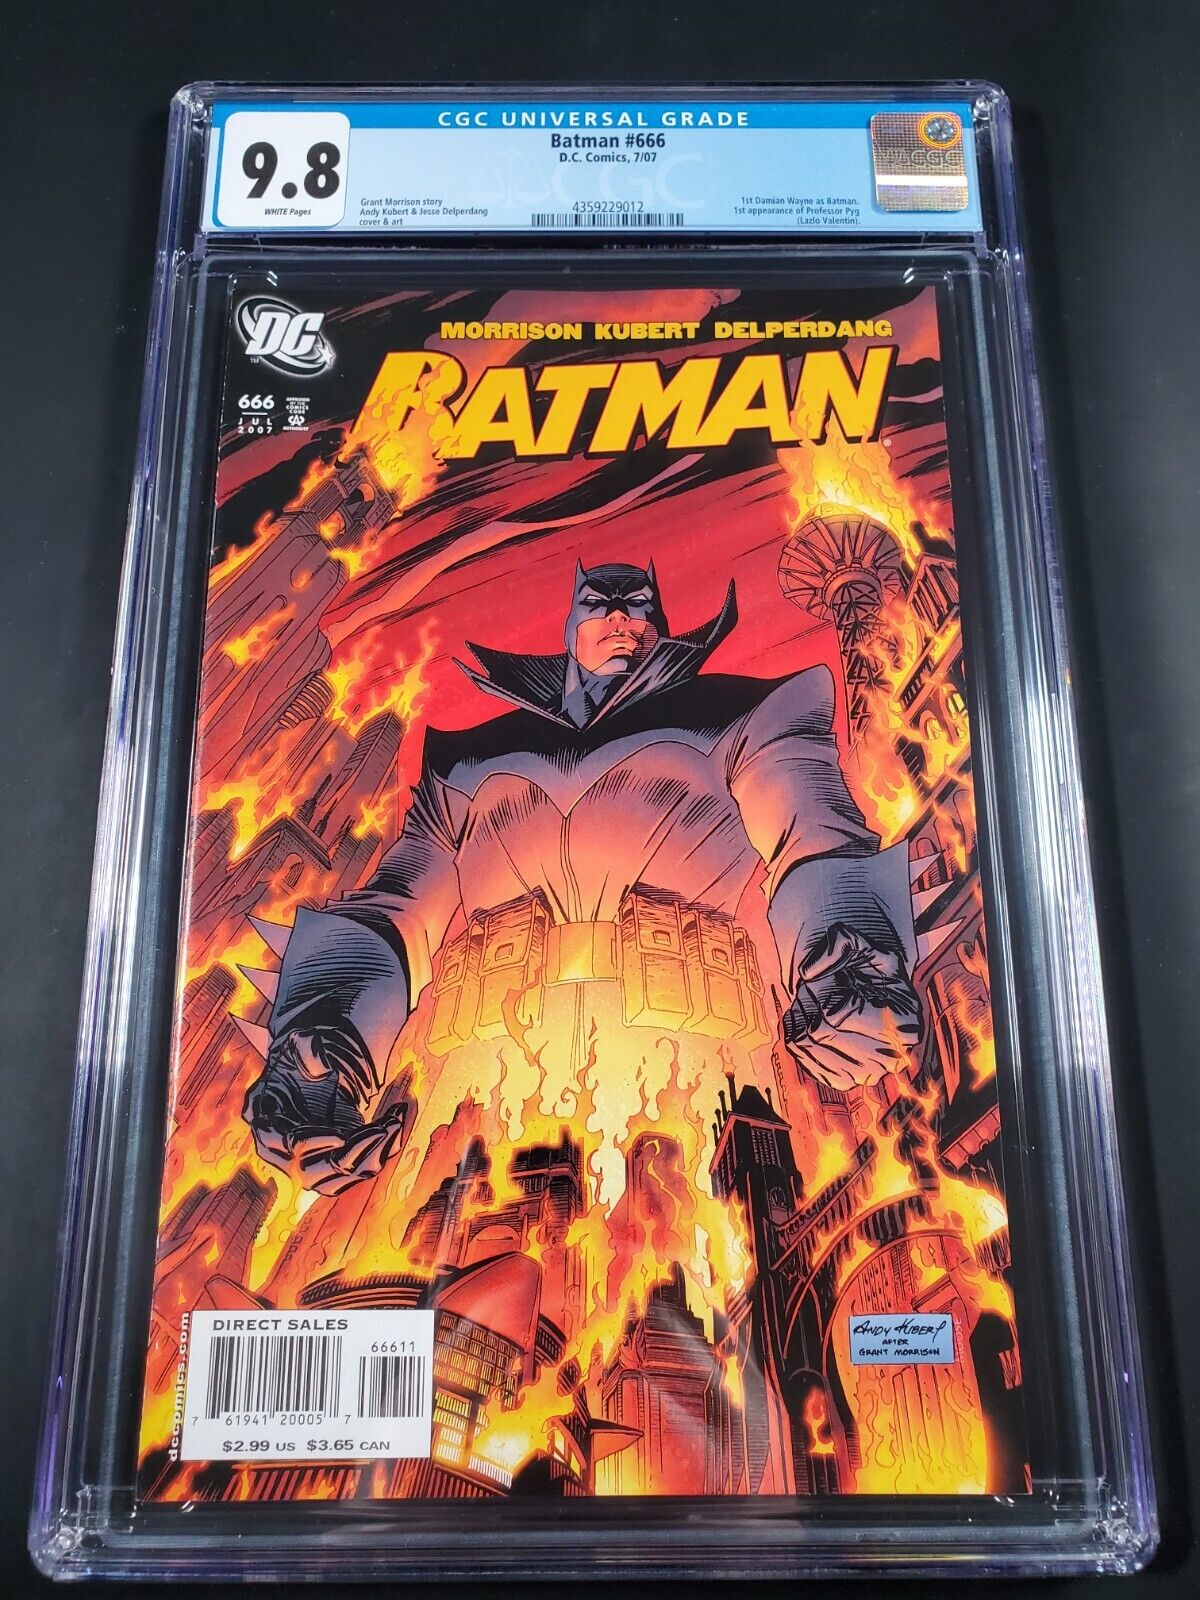 Batman #666 DC Comics CGC 9.8 1st Appearance Damian Wayne as Batman